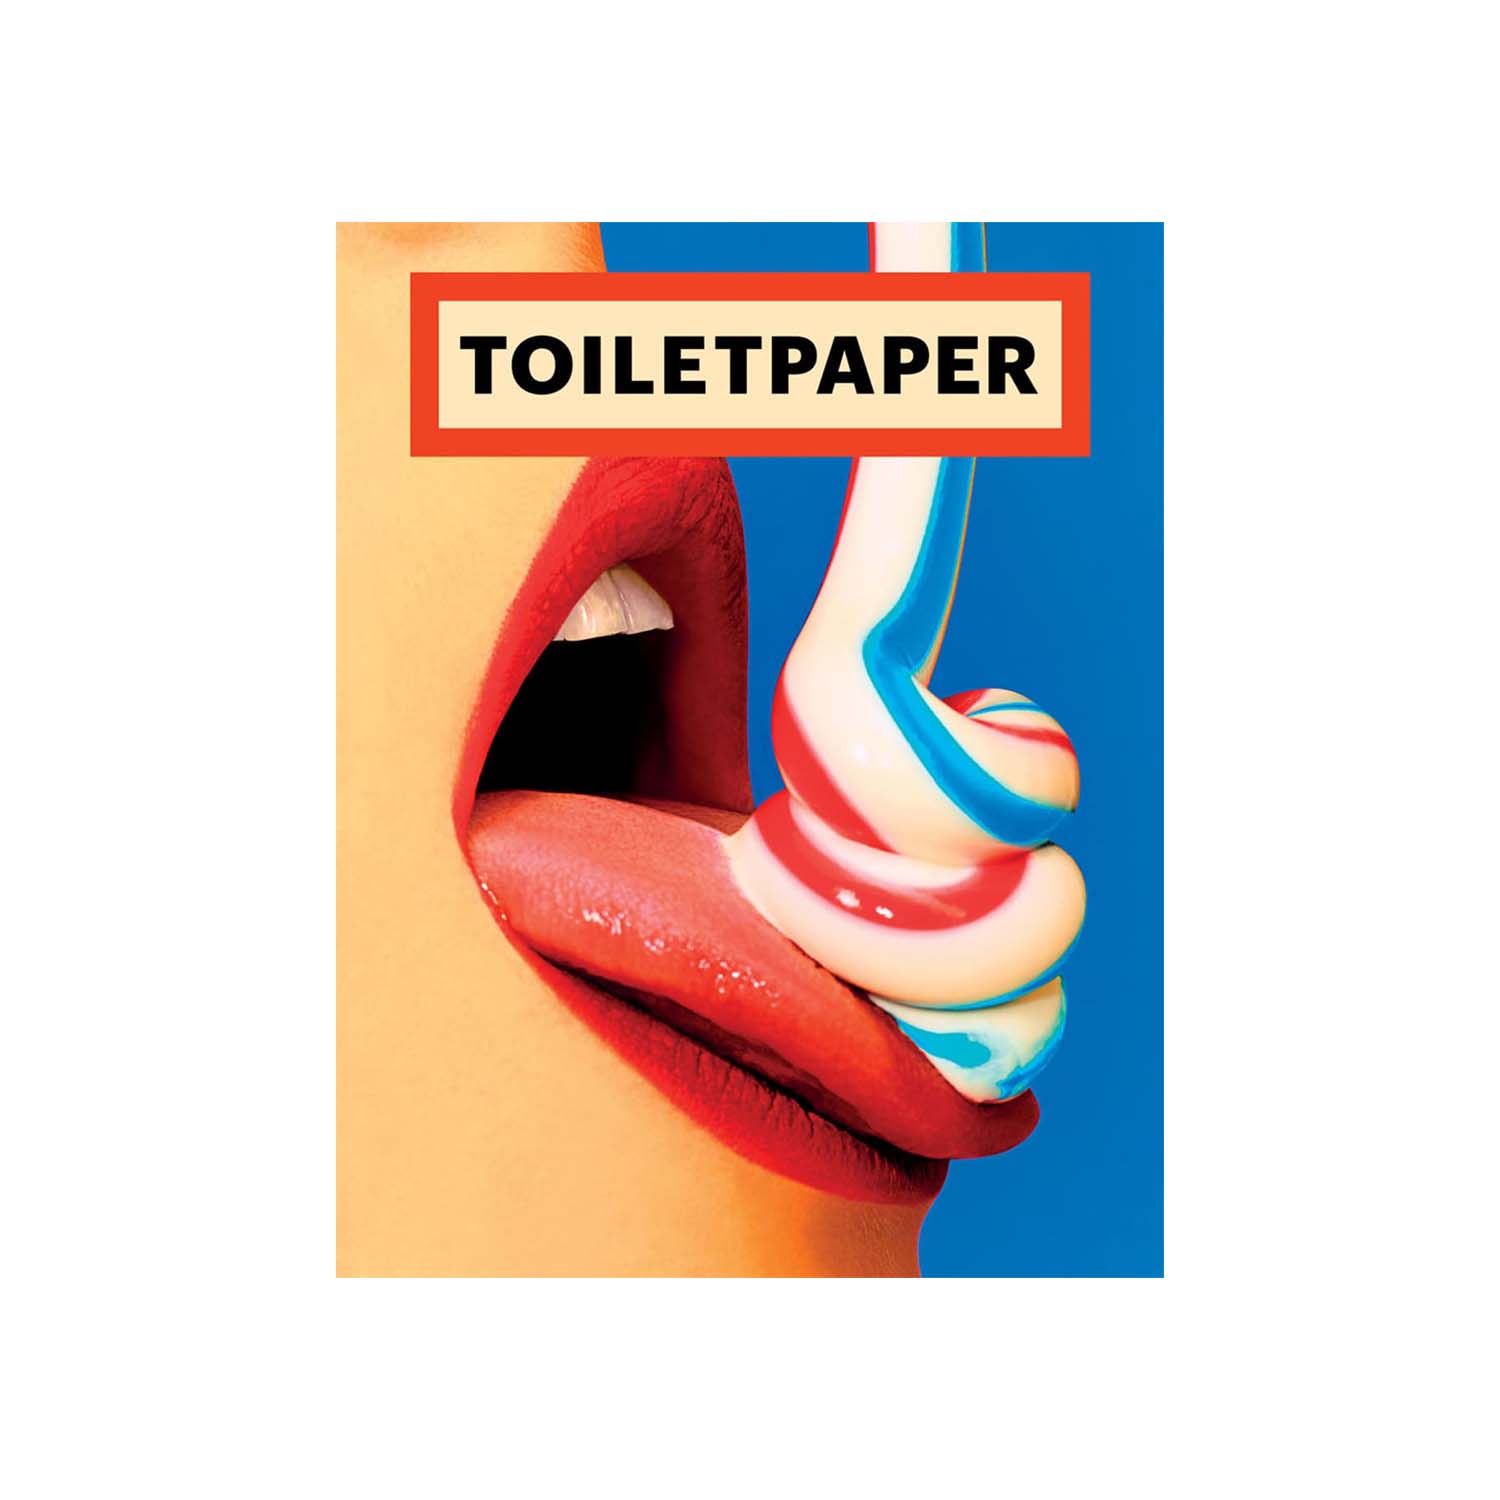 Toilet Paper. Photo Museum Ireland.